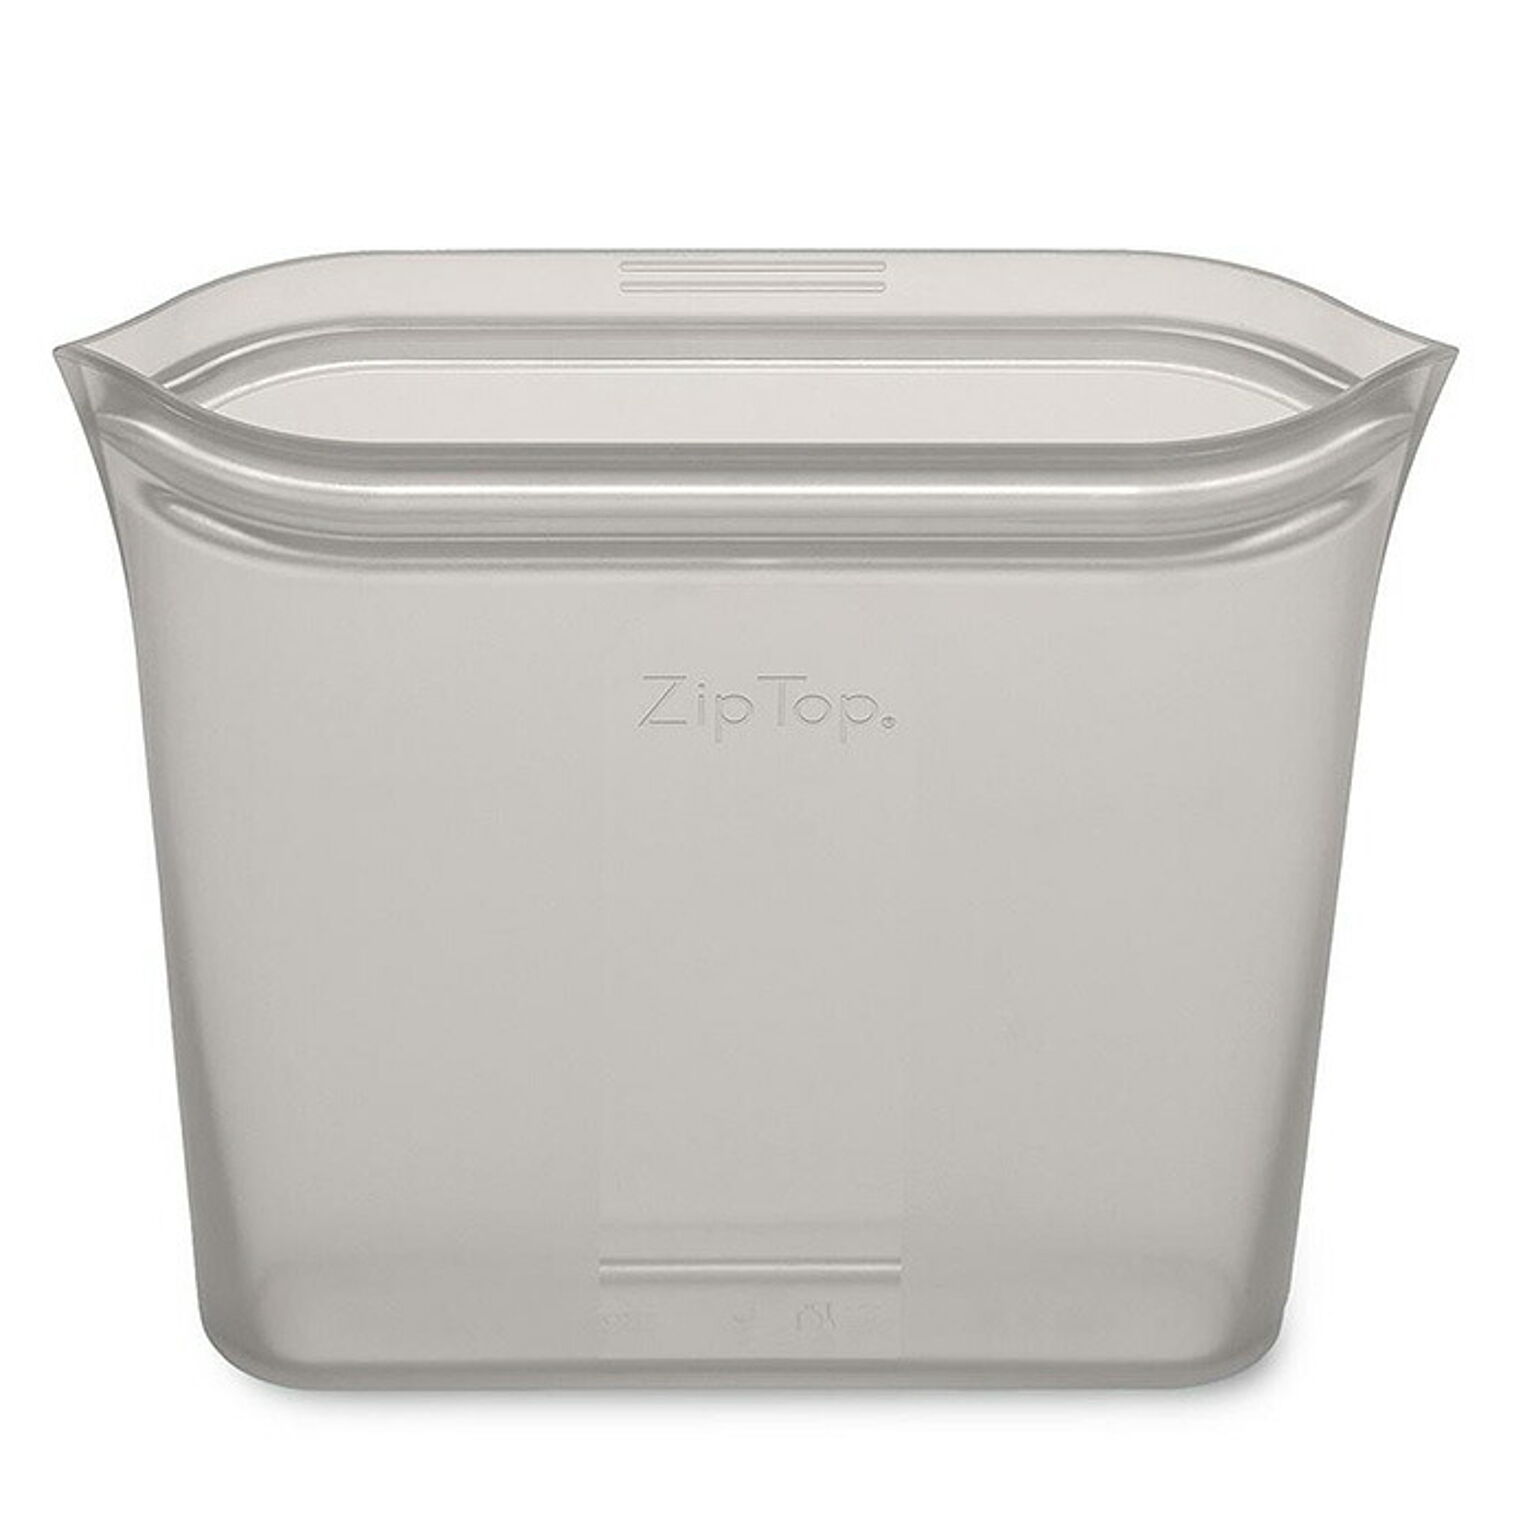 Zip Top ジップトップ 保存容器 バッグ サンドイッチ 710ml 繰り返し使用 自立 シリコーン シリコン 時短 冷凍 電子レンジ 食洗機 ZipTop